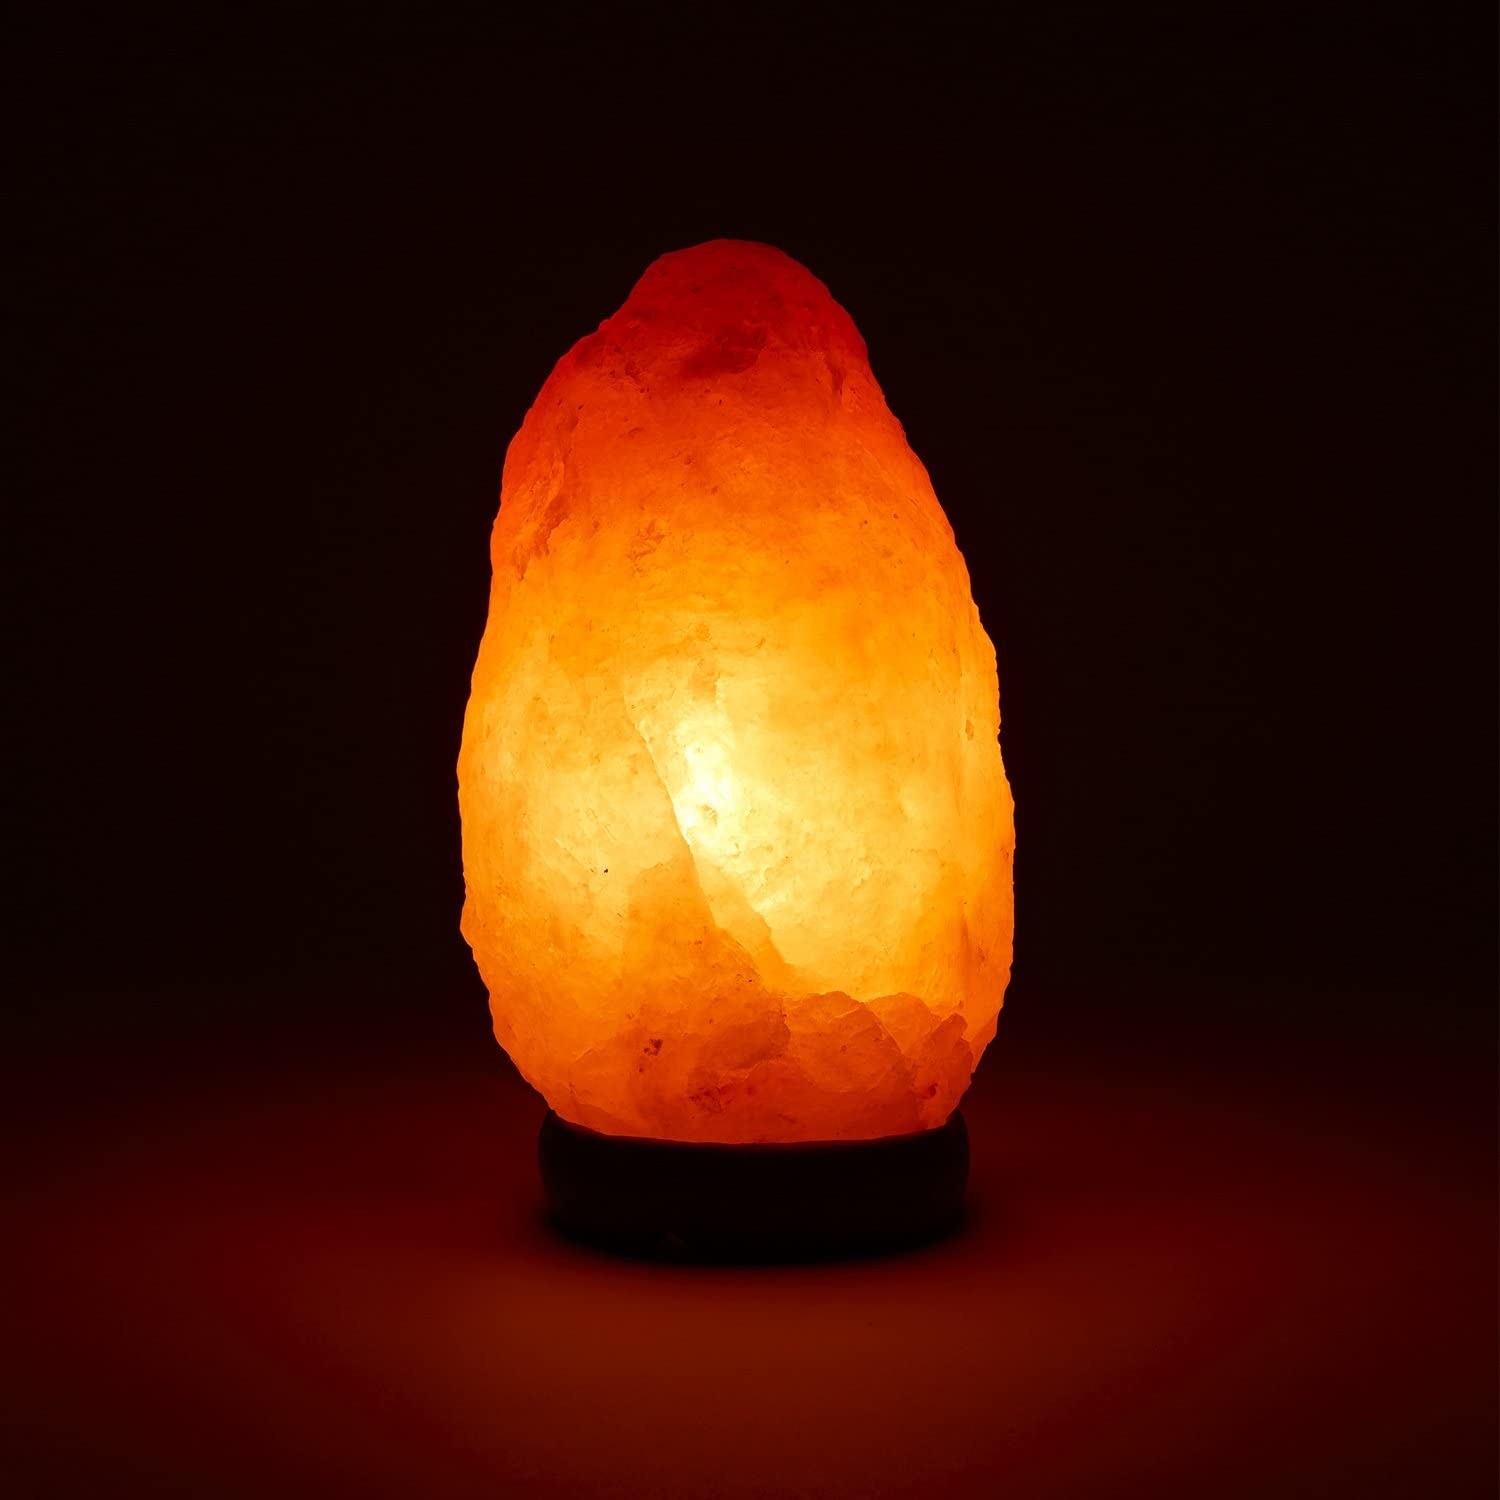 the salt lamp emitting a warm glow